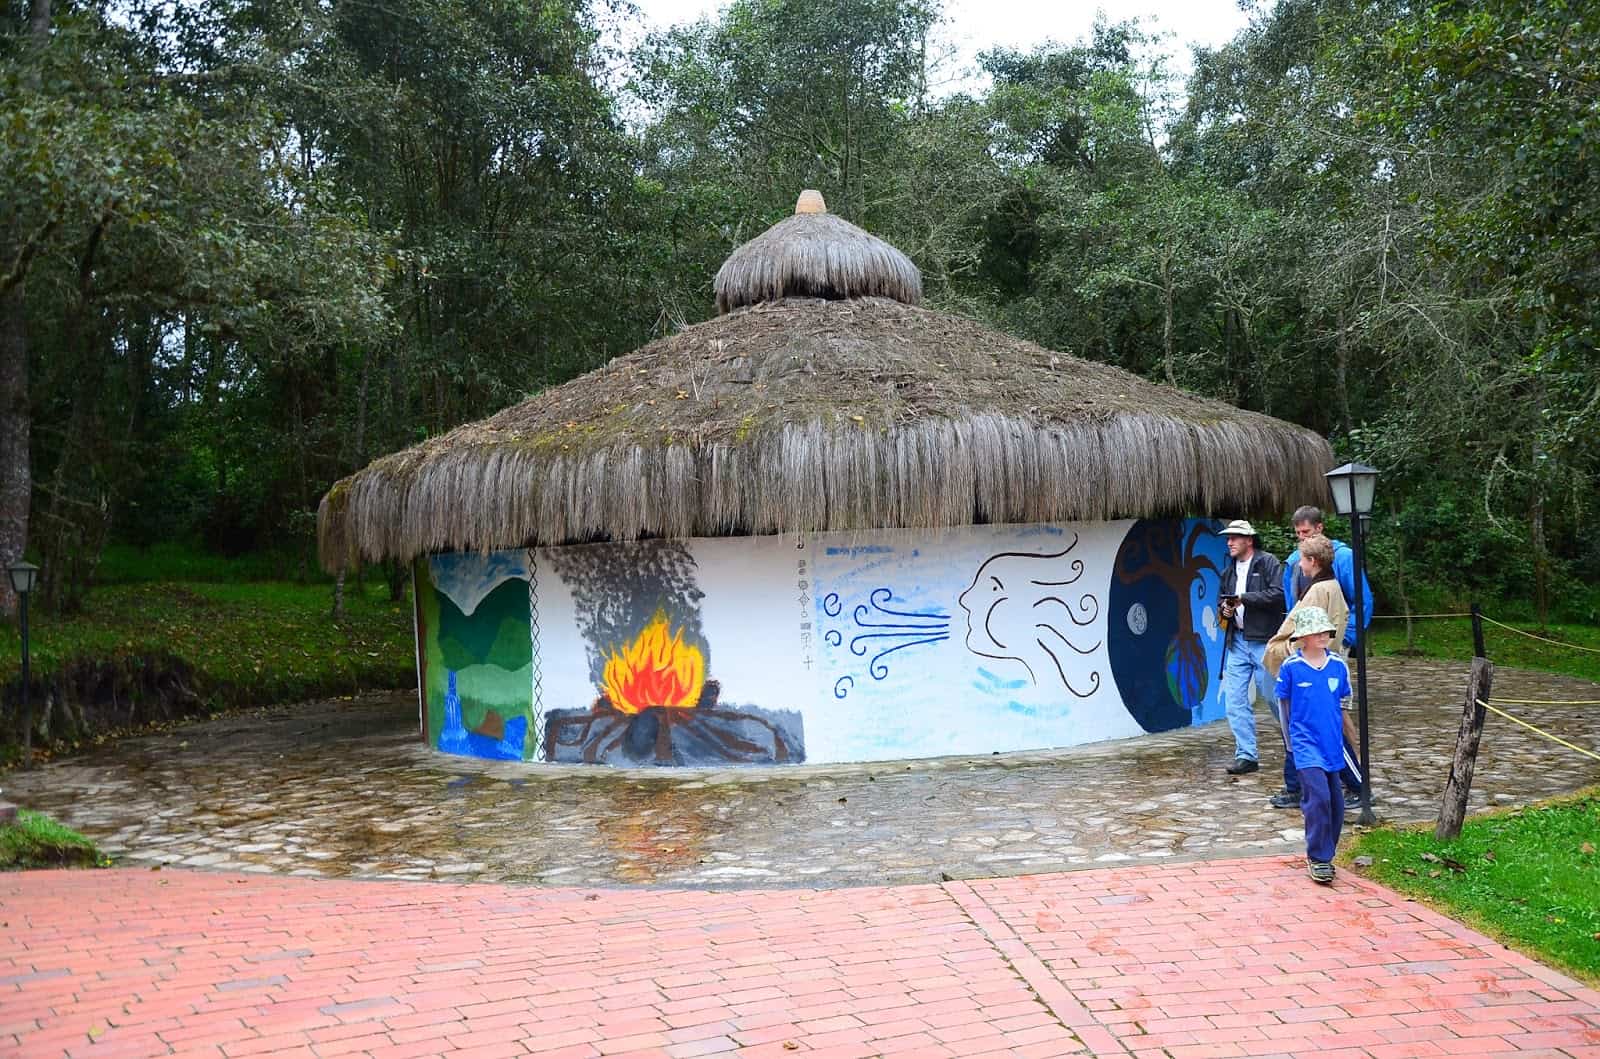 Muisca hut at Lake Guatavita in Colombia